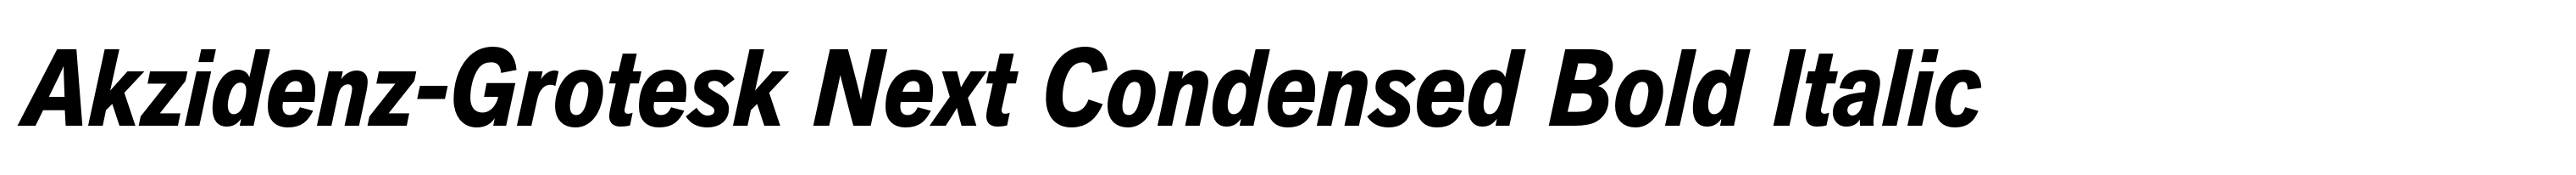 Akzidenz-Grotesk Next Condensed Bold Italic